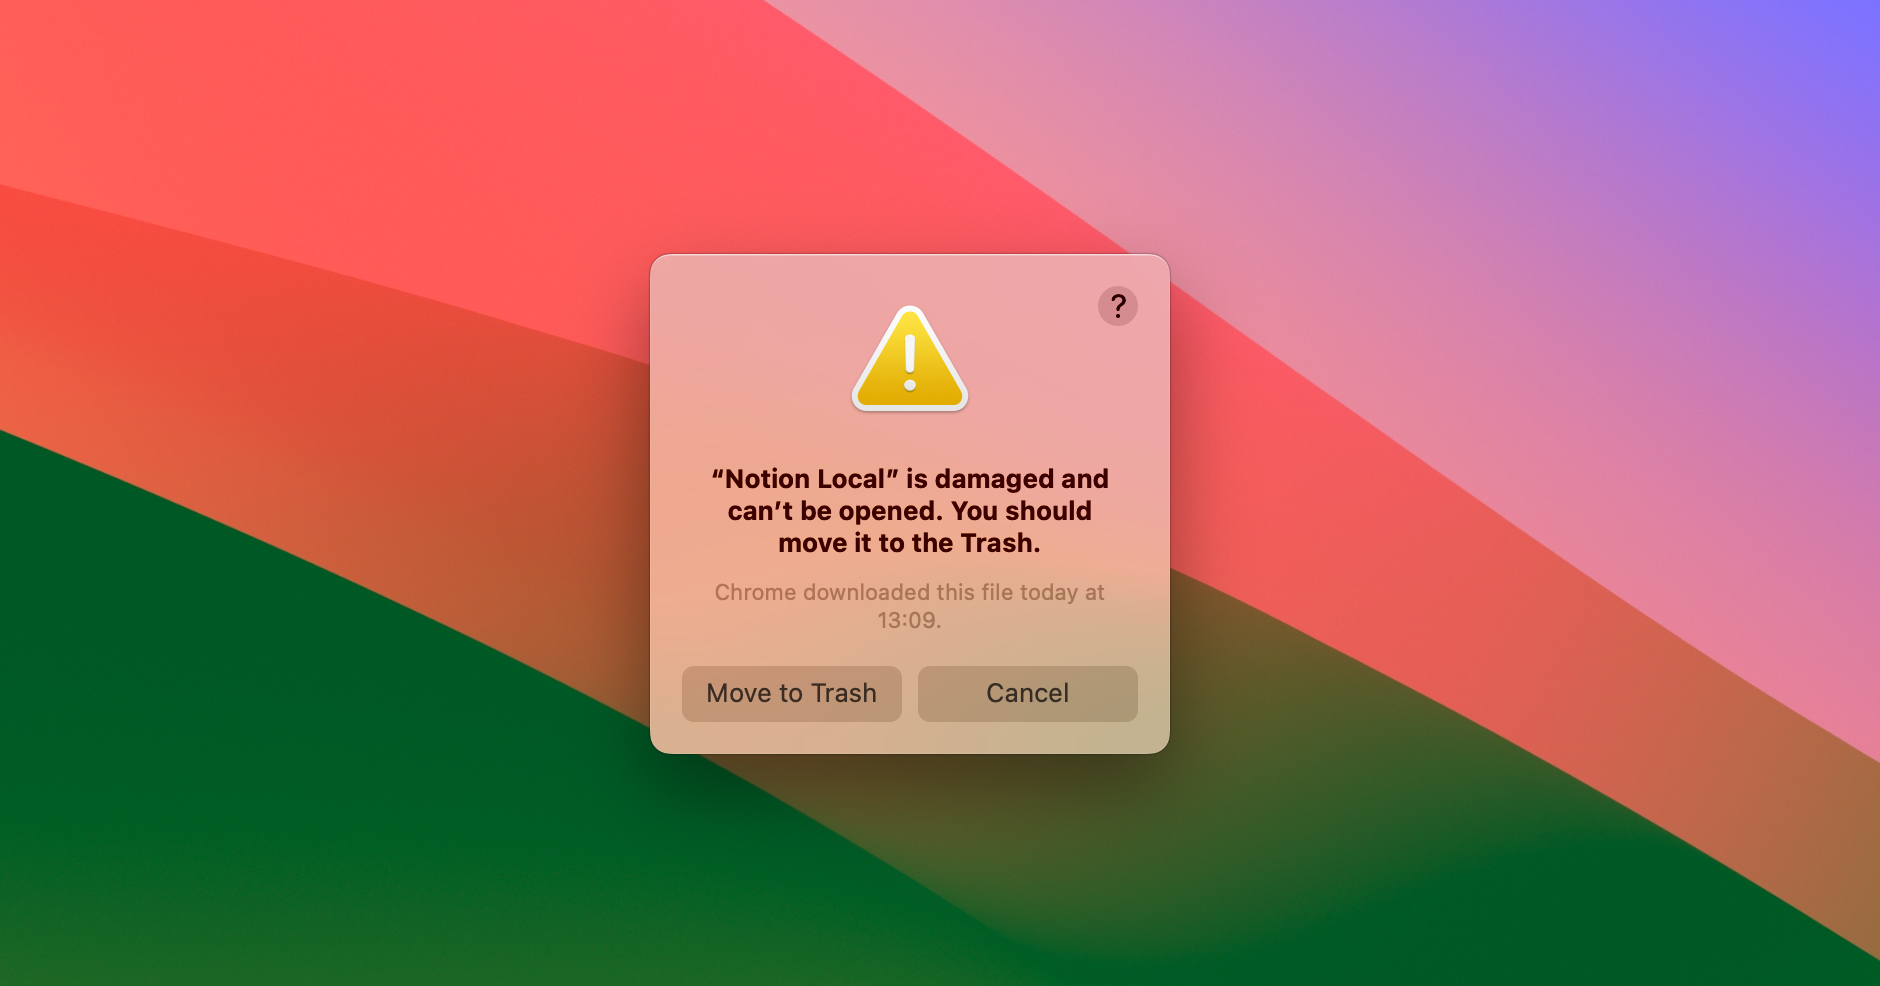 macOS Sonoma Gatekeeper warning: The app is damaged